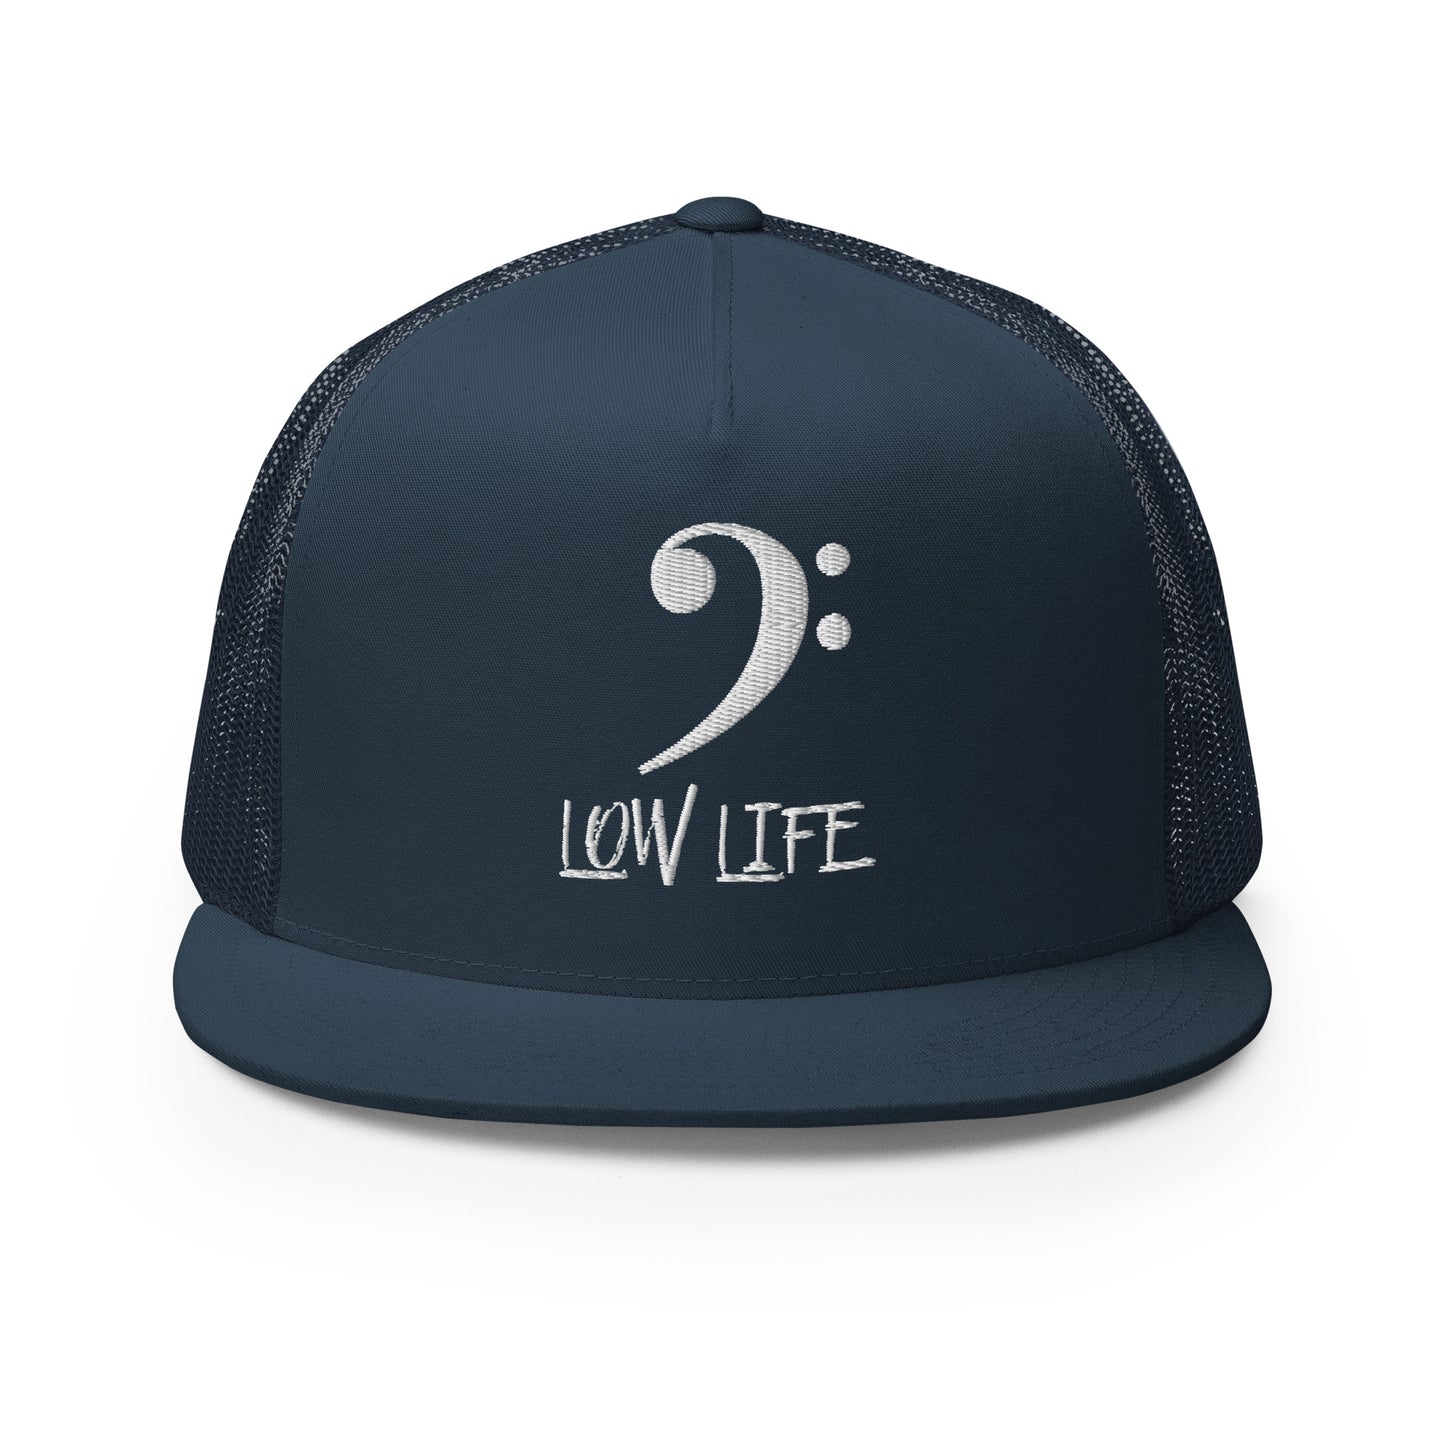 Away Team - Low Life Flat Bill Trucker Cap